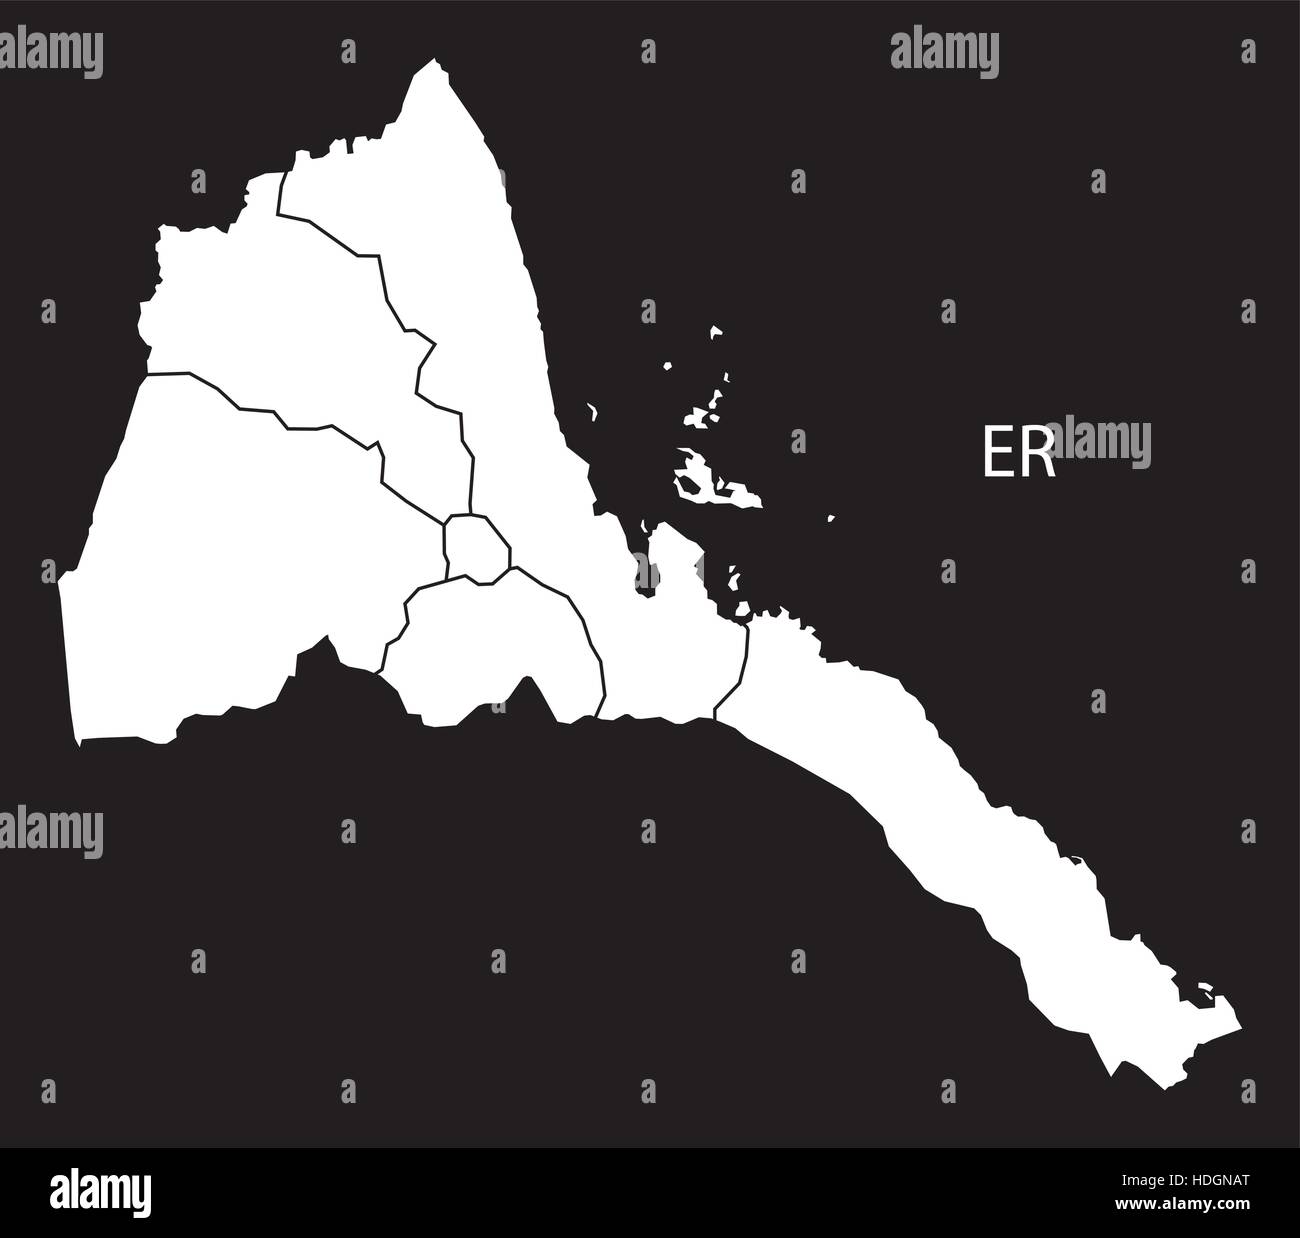 Eritrea regions Map black and white illustration Stock Vector